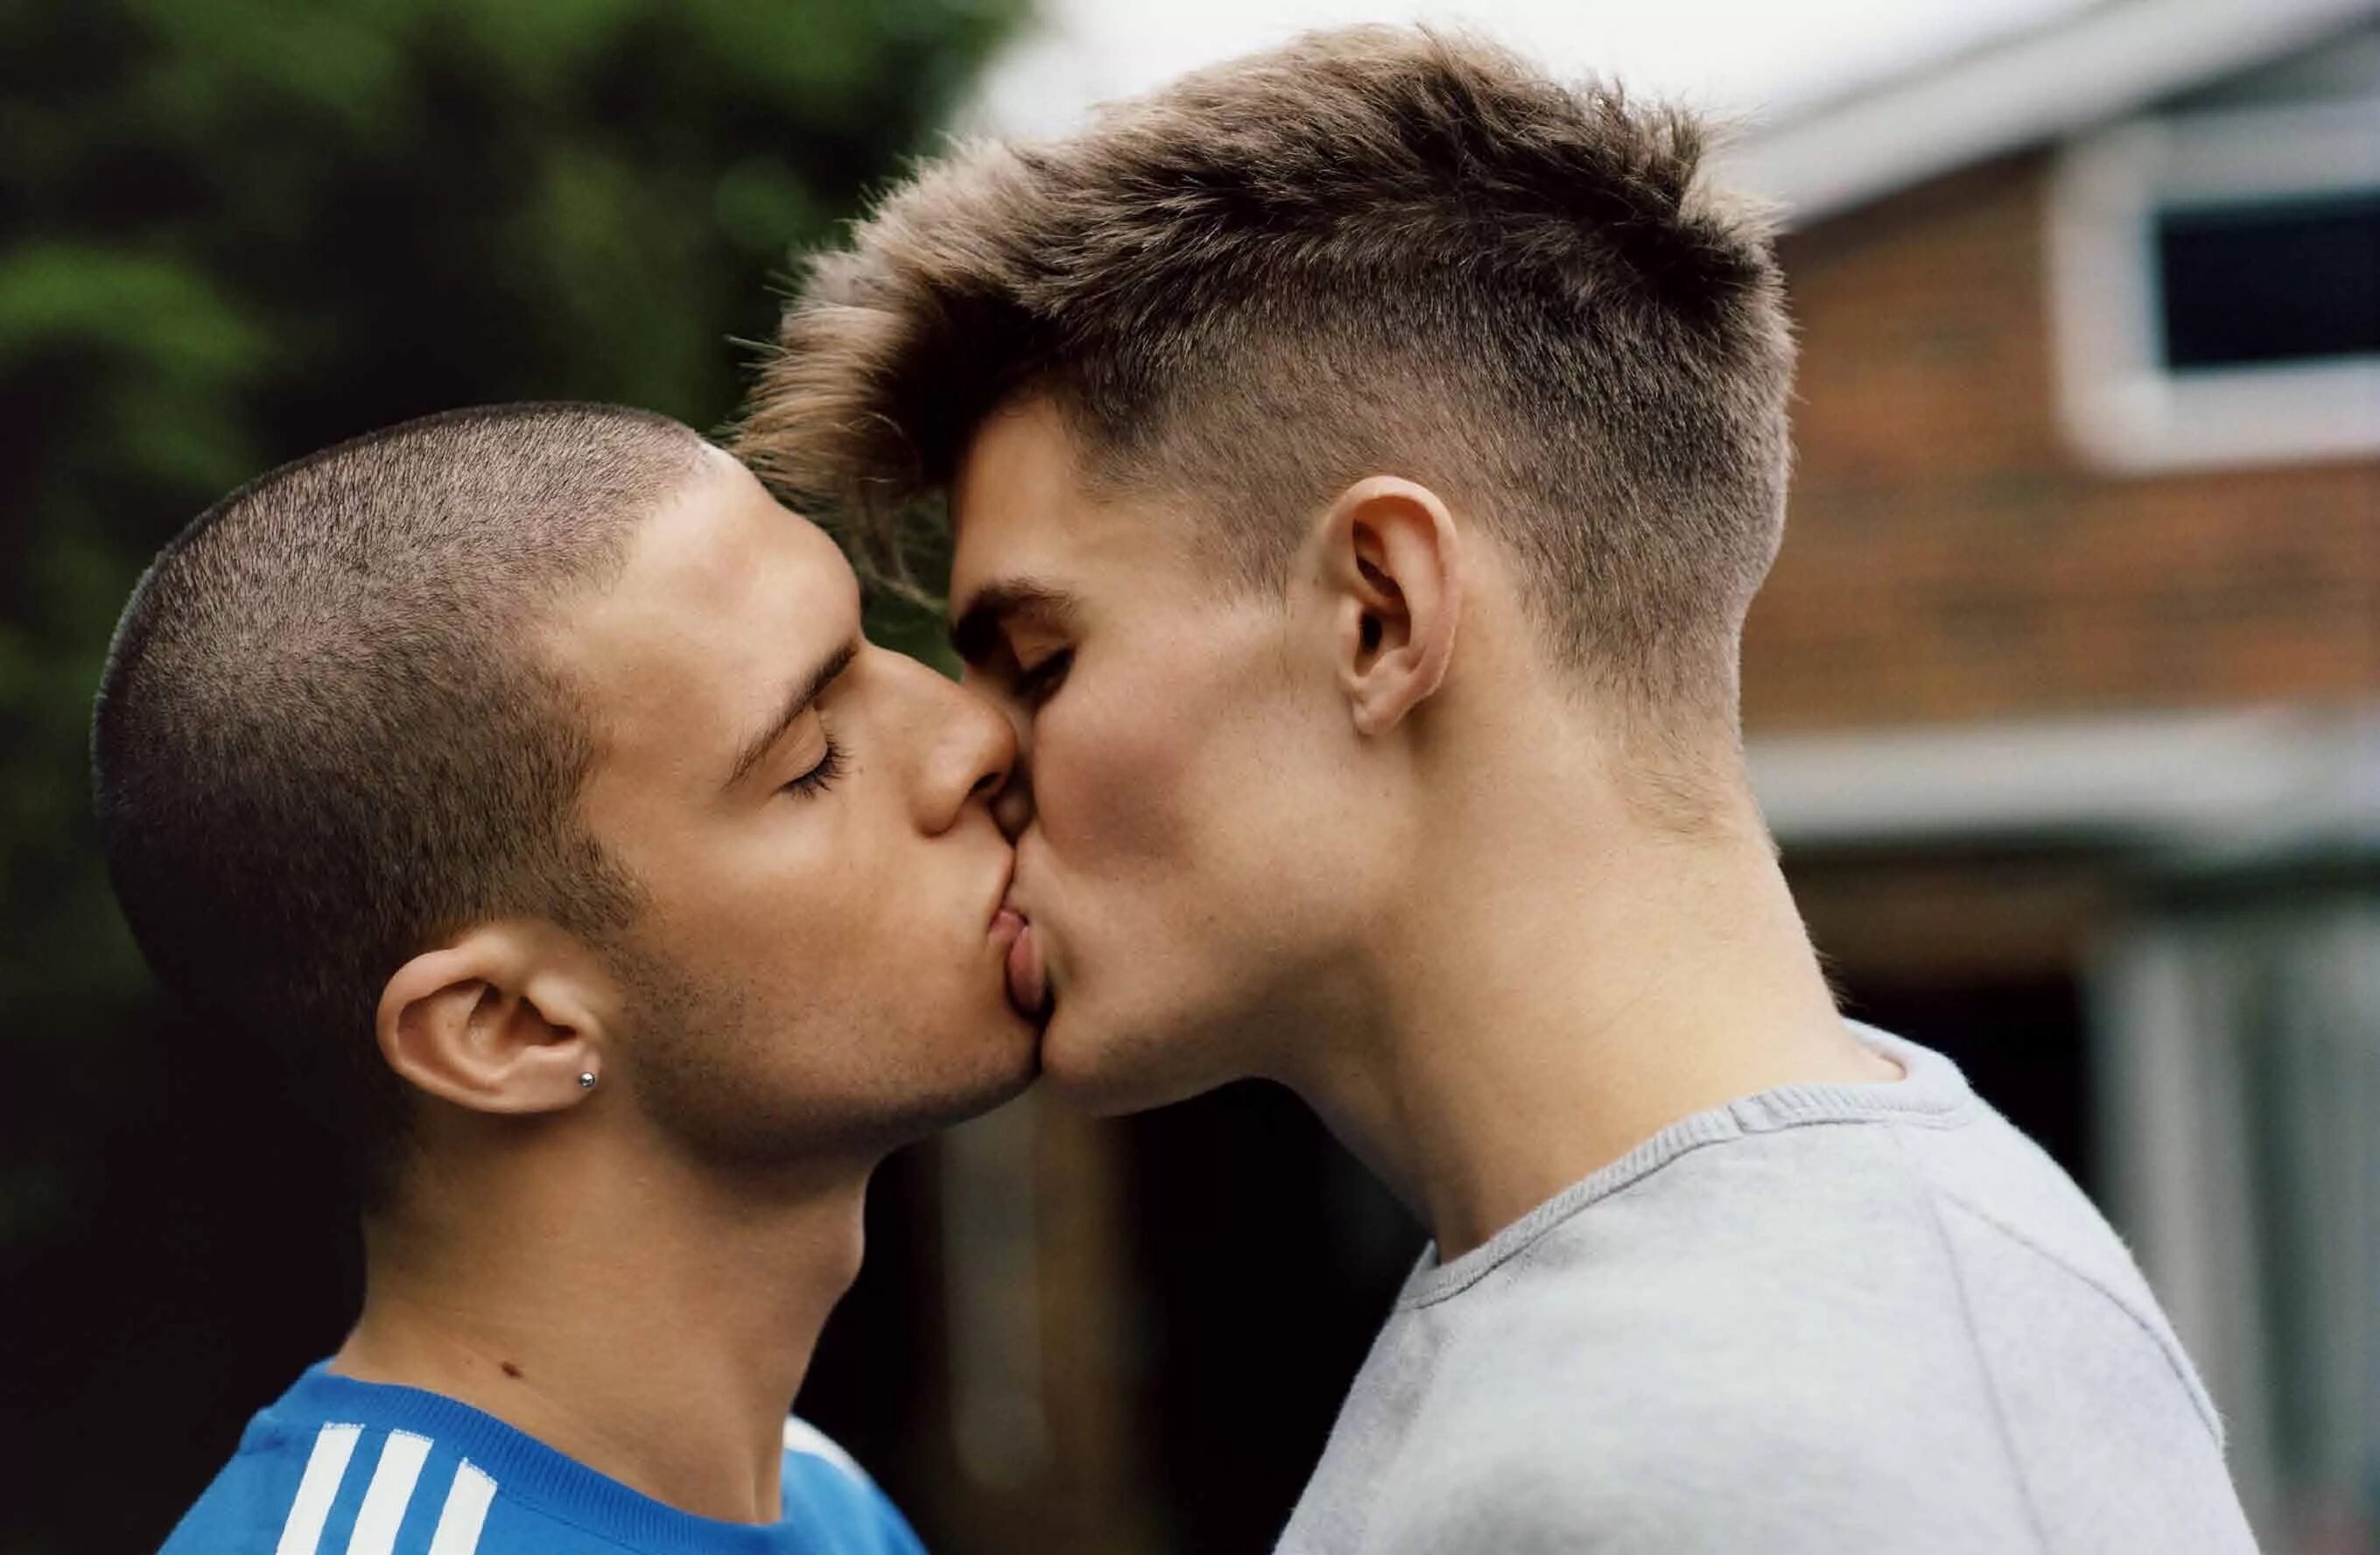 Мужики е друг друга. Мужчины целуются. Поцелуй двух мужчин. Однополый поцелуй. Парень целует парня.